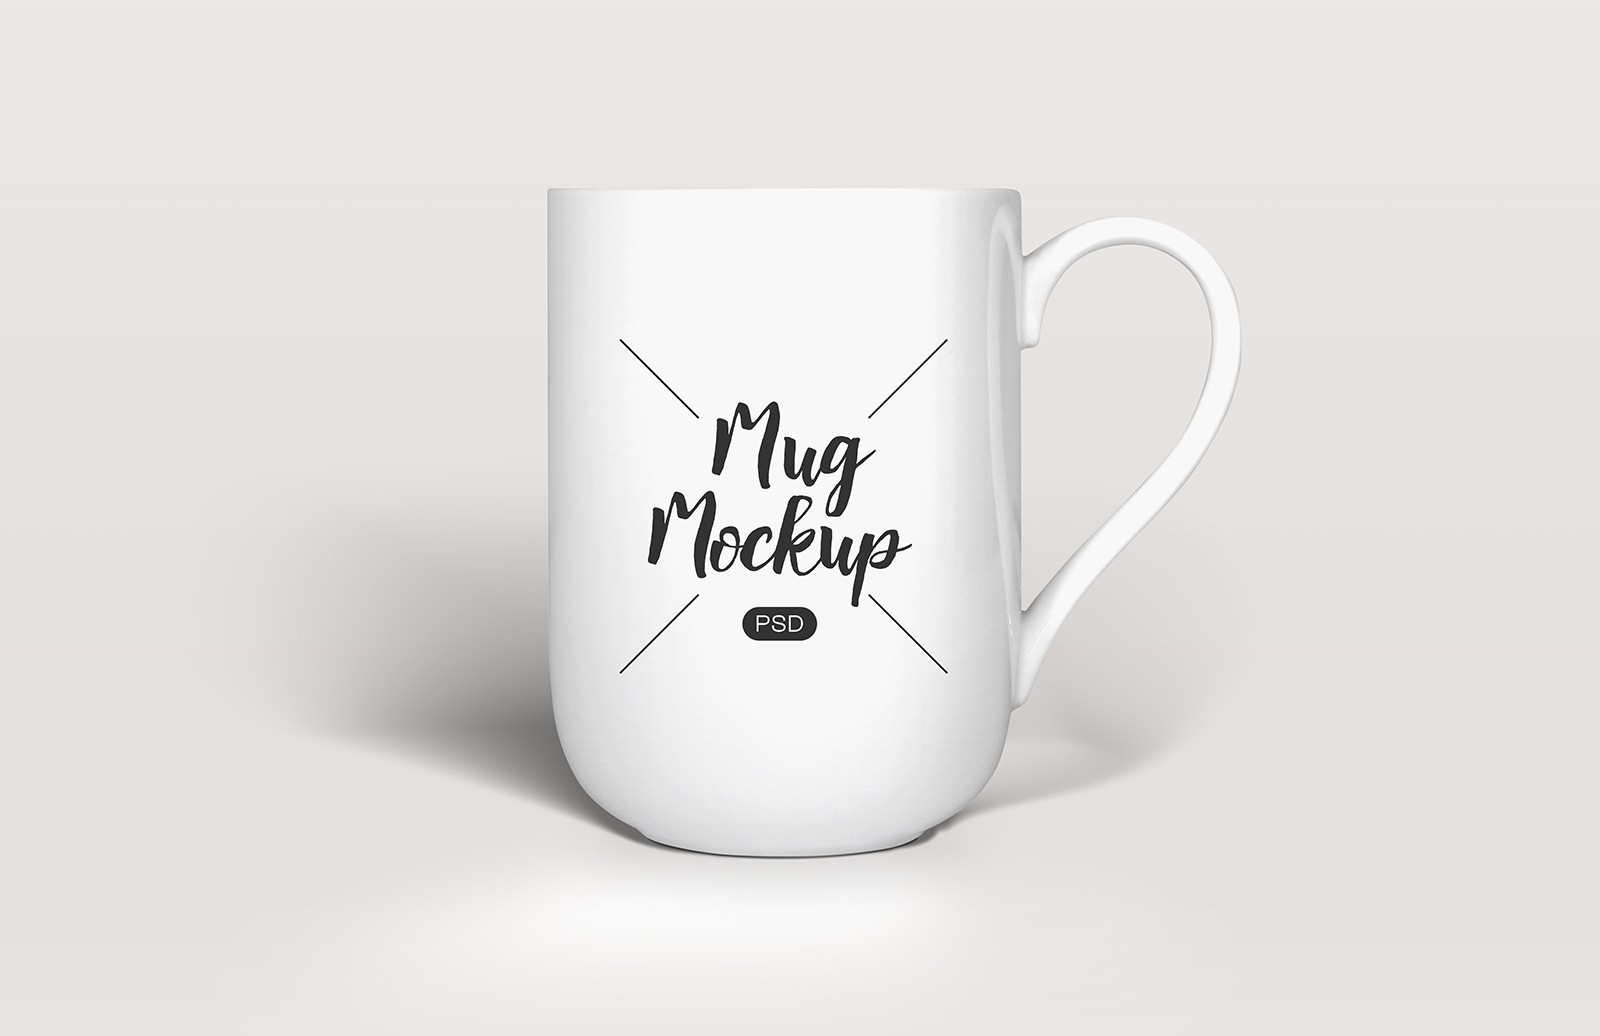 咖啡杯陶瓷杯样机 Coffee Mug Mockup PSD插图